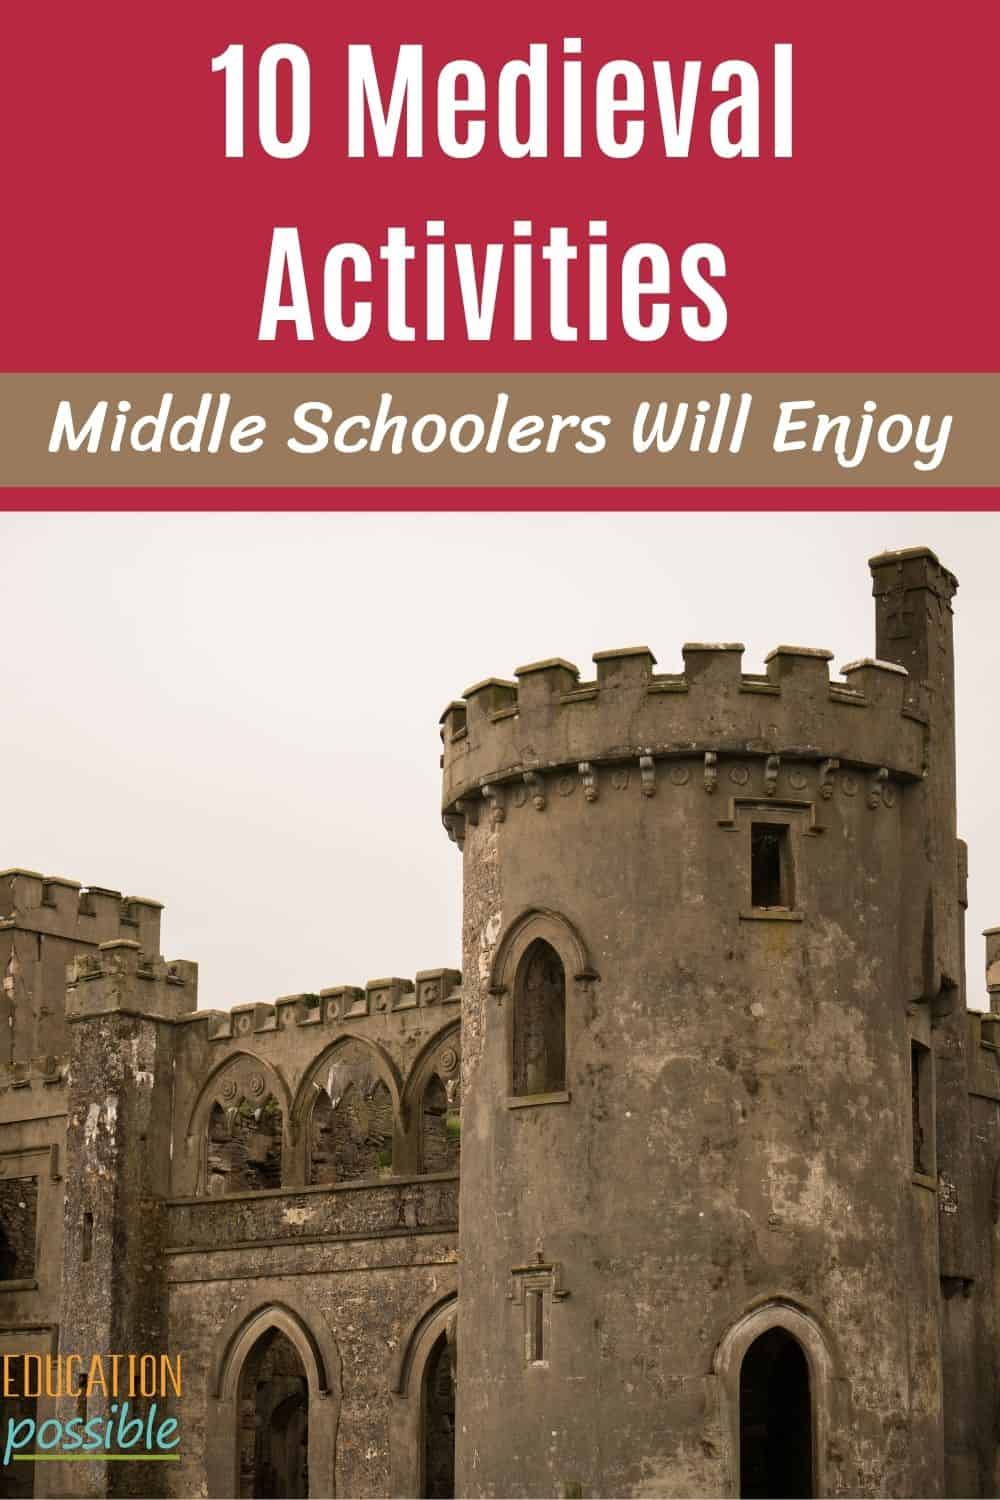 10 Medieval Activities Middle Schoolers Will Enjoy